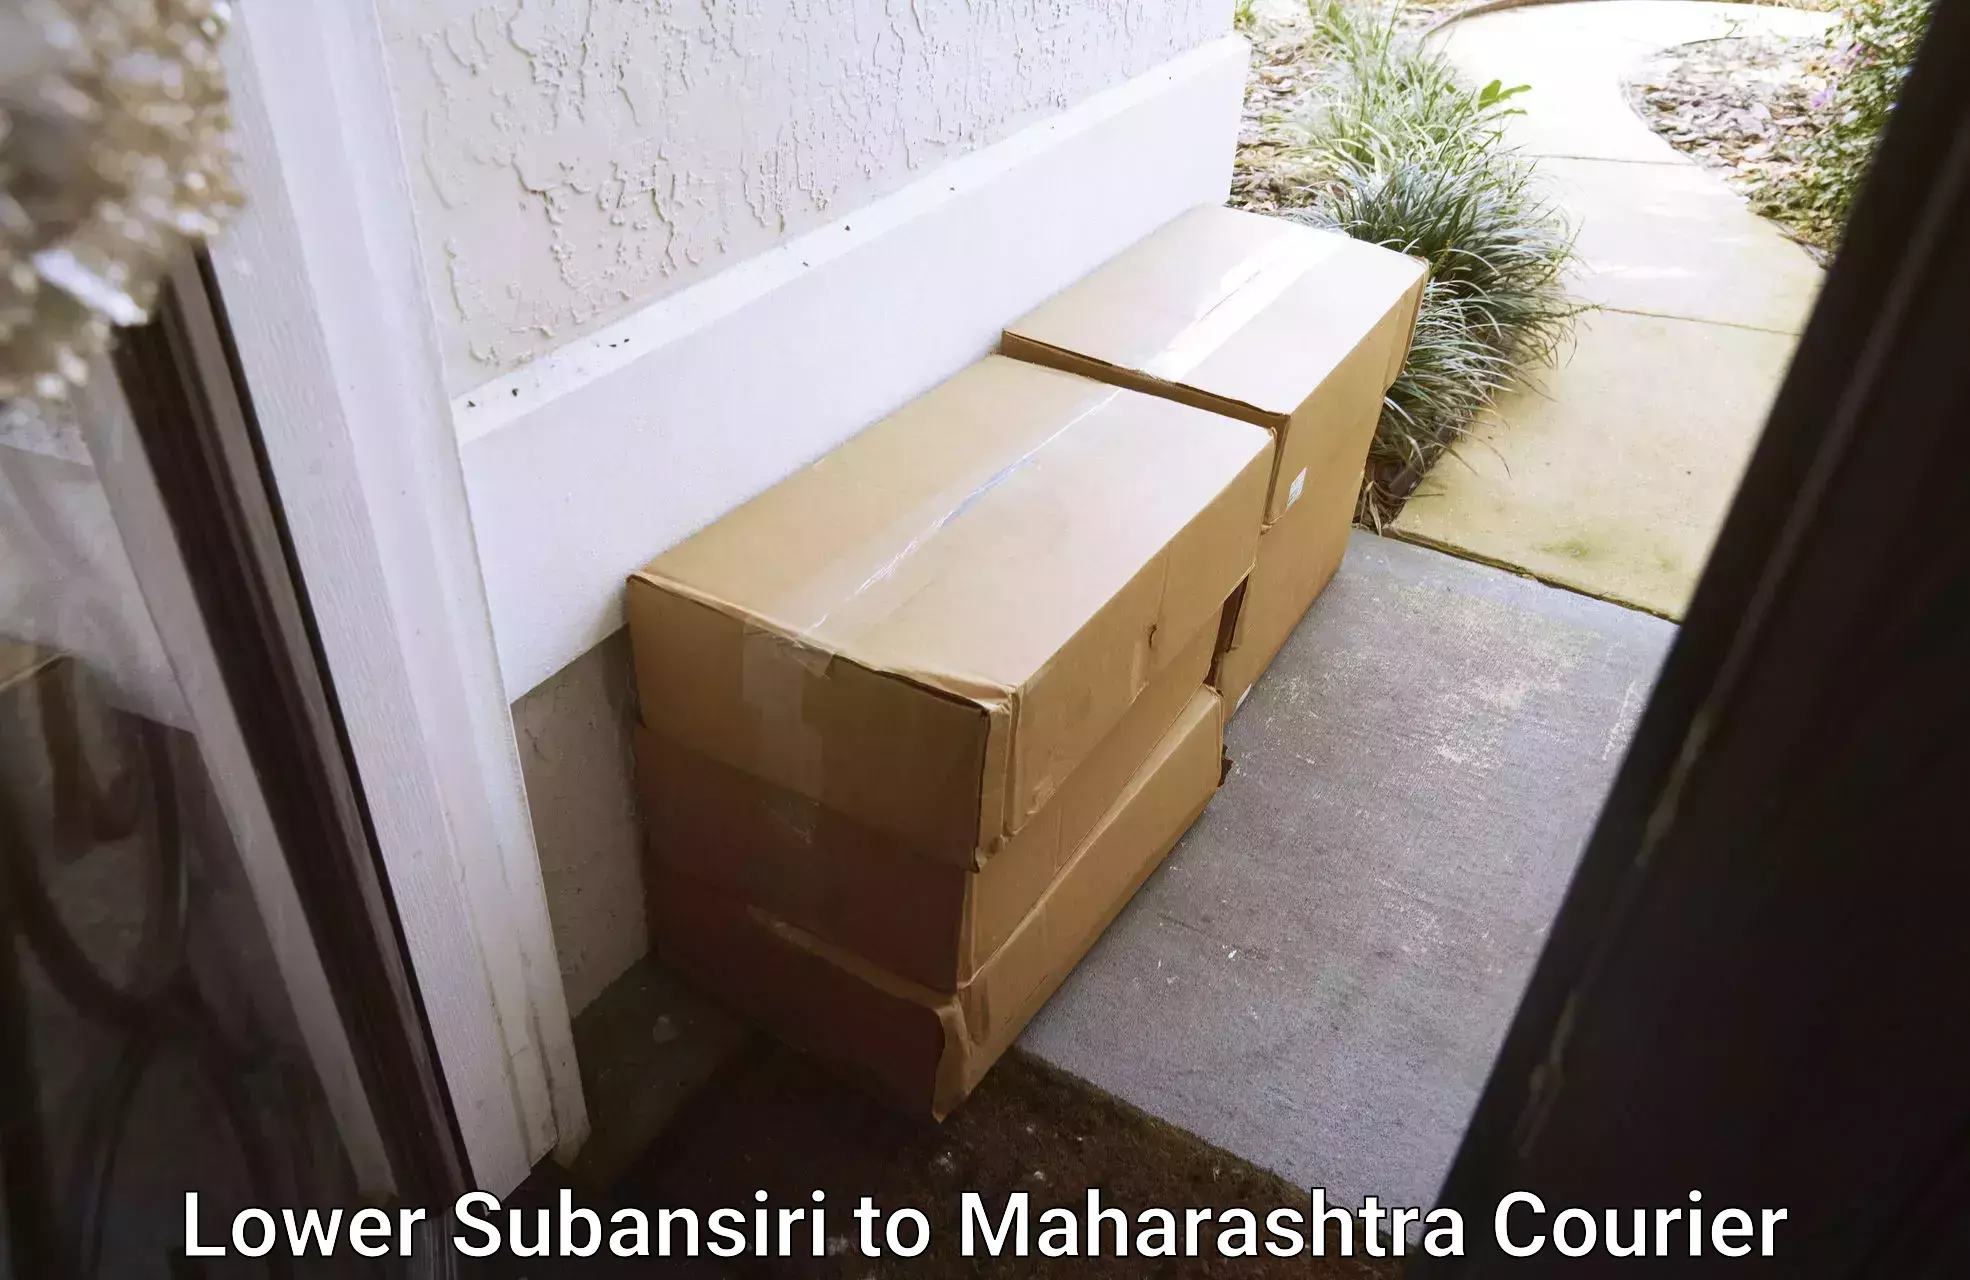 User-friendly delivery service Lower Subansiri to Maharashtra